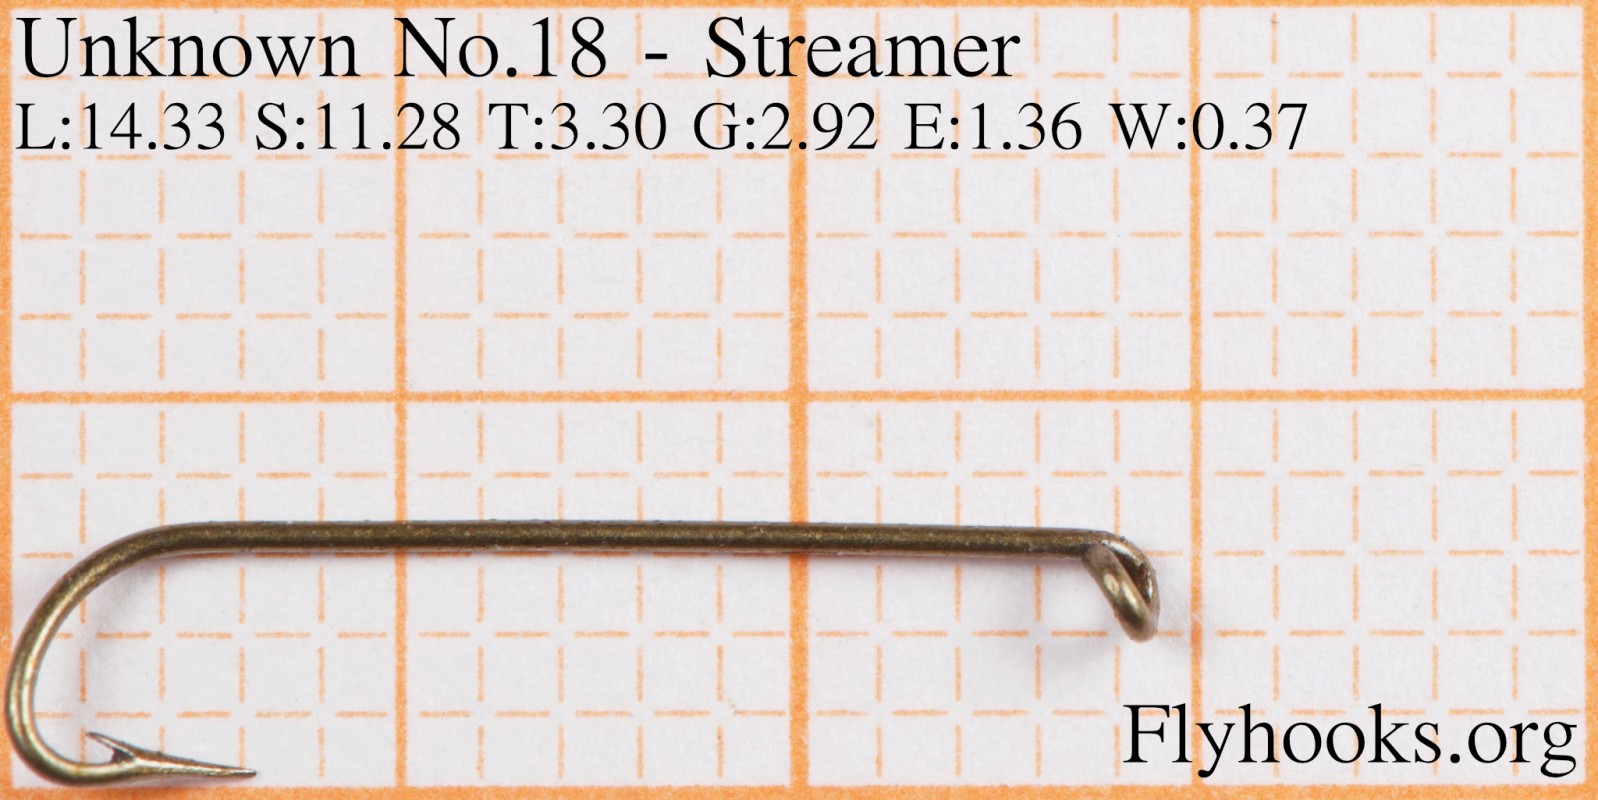 No.18 - Streamer